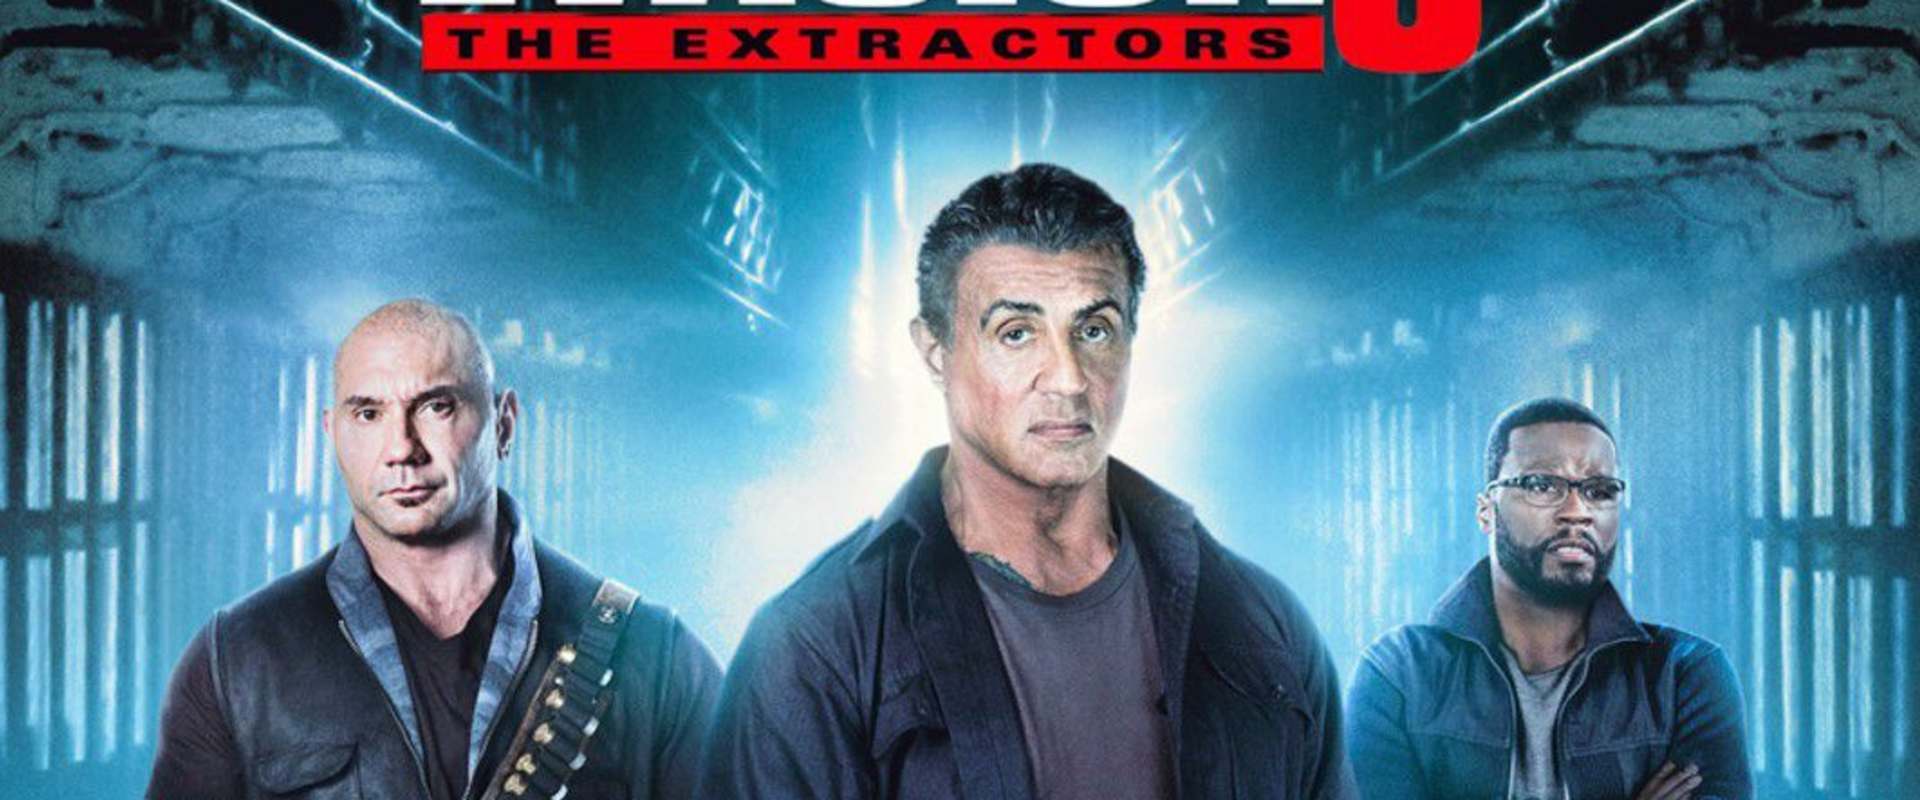 Escape Plan: The Extractors background 1